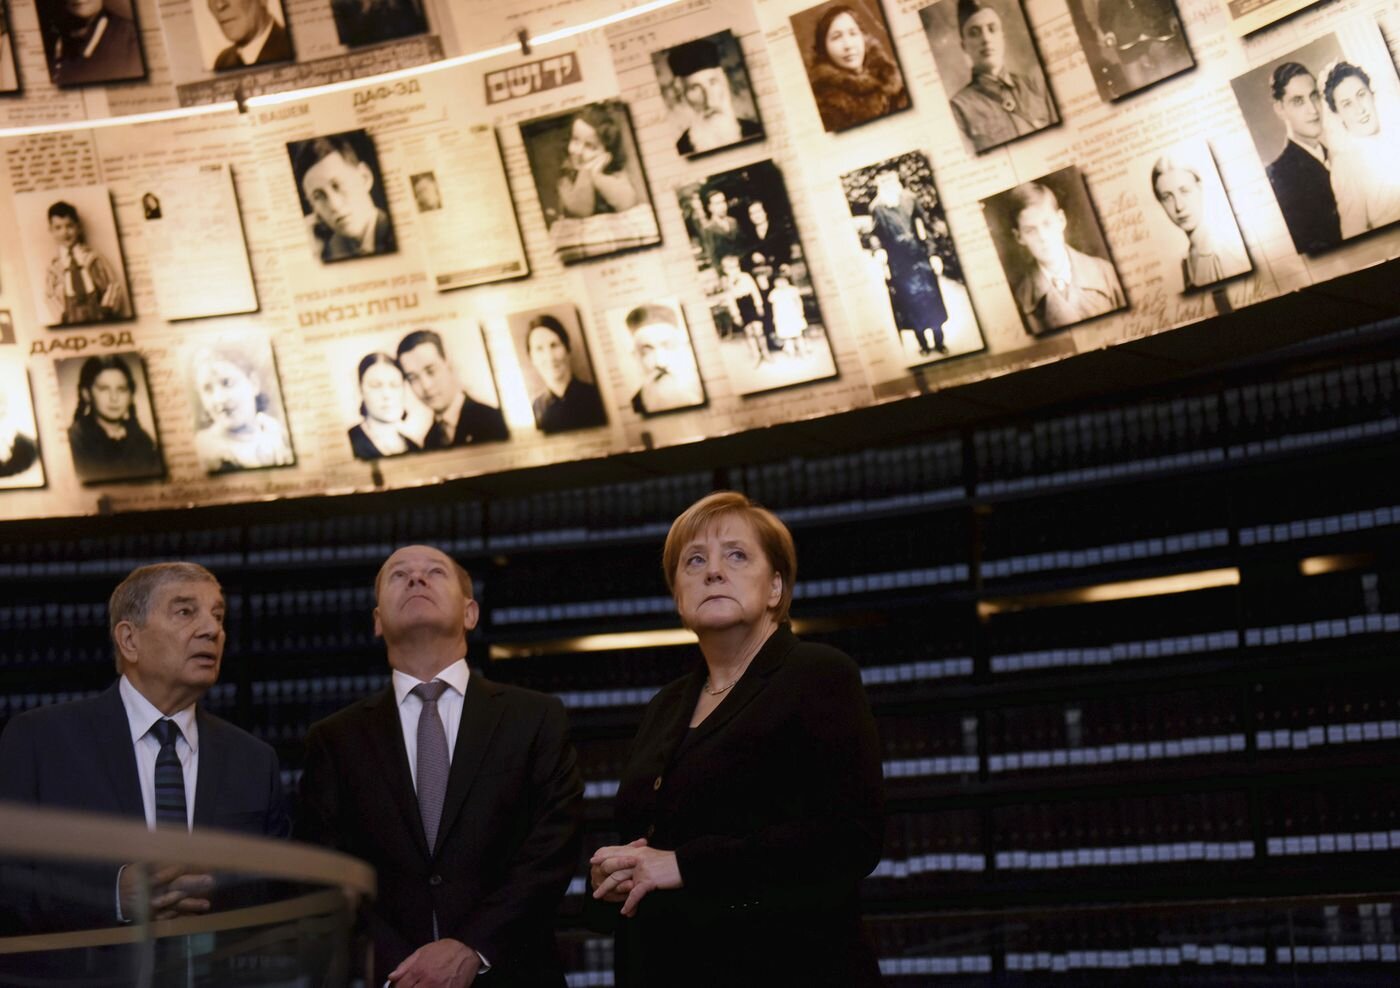 German Chancellor Angela Merkel visits the Hall of Names in the Yad Vashem Holocaust Museum in Jerusalem, Israel, Thursday Oct. 4, 2018. (Debbie Hill/Pool via AP)